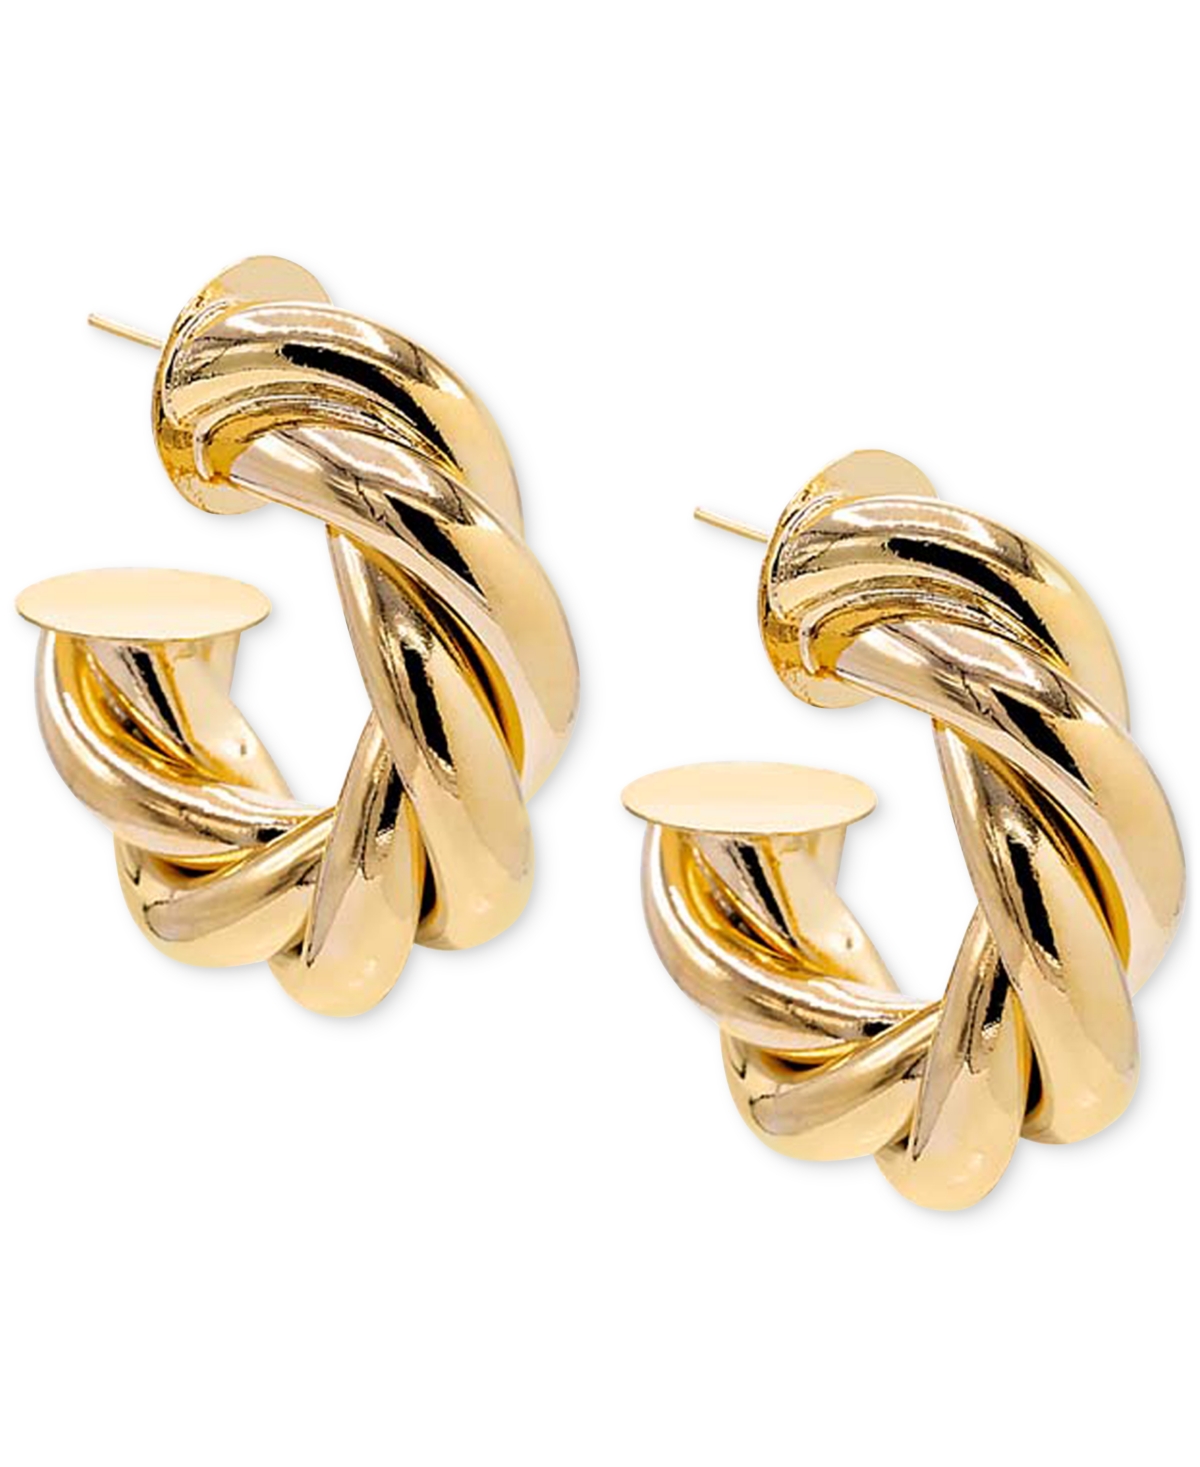 14k Gold-Plated Medium Wide Twisted Rope Hoop Earrings, 1.45" - Gold